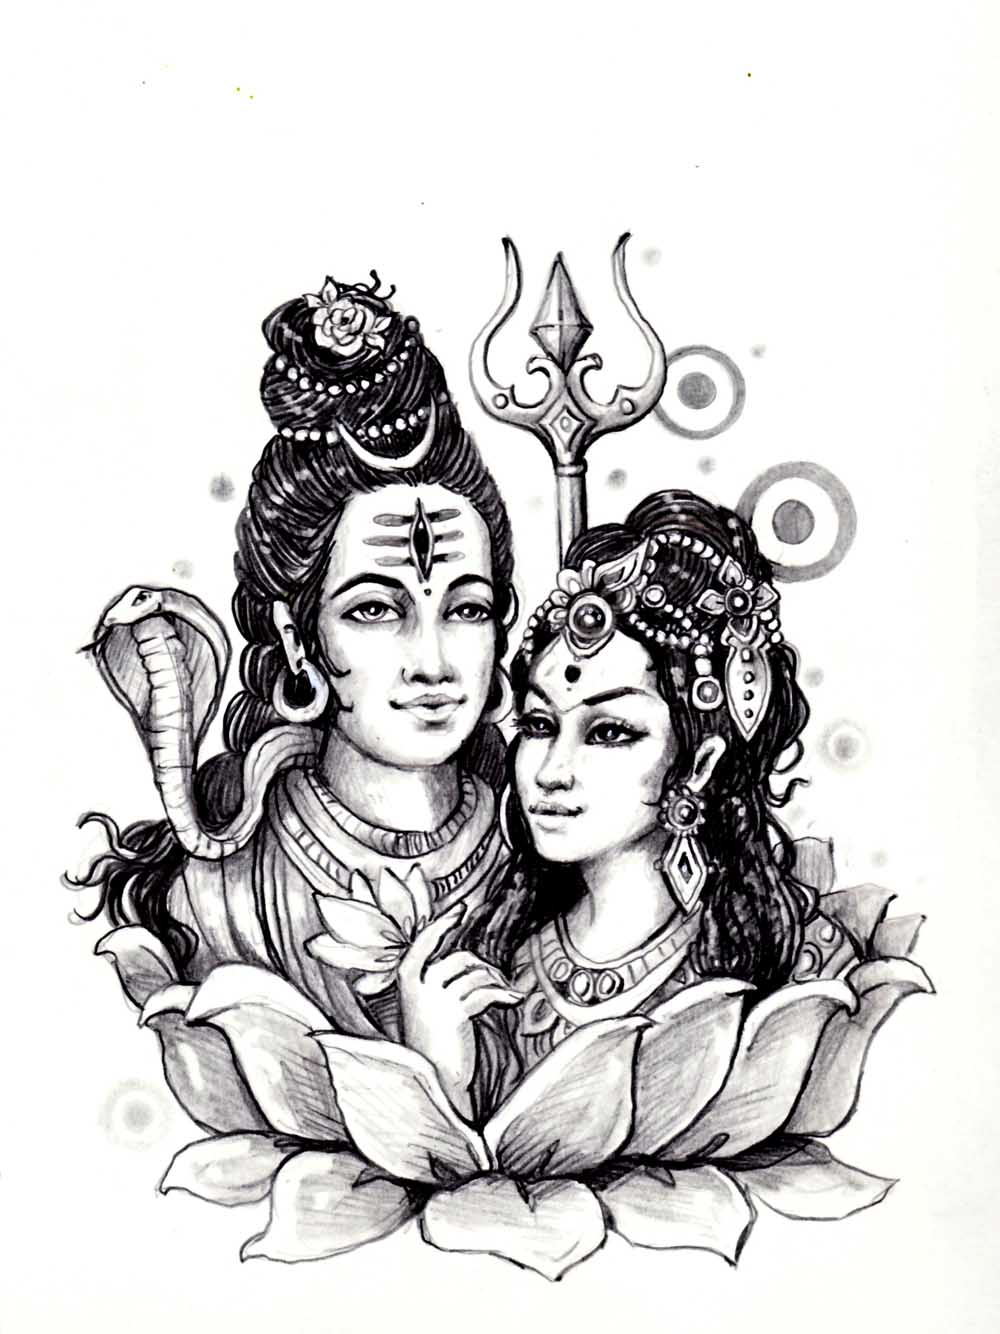 Shiva sati india - Image with : Couple, Guitar, Man, Woman